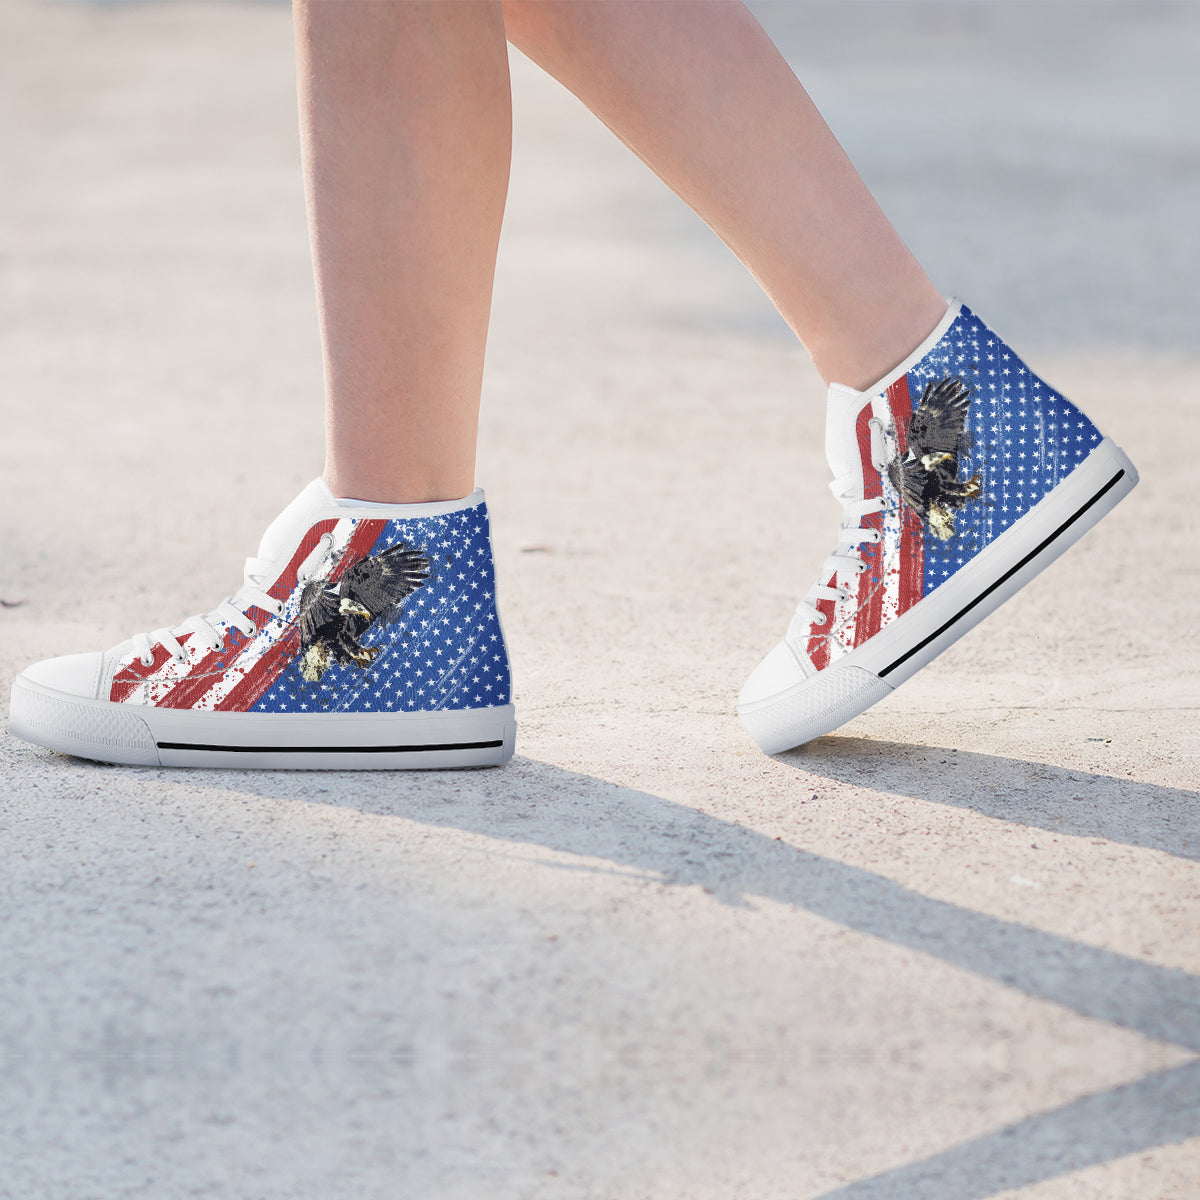 USA Flag & Eagle - Women's High Top Shoes